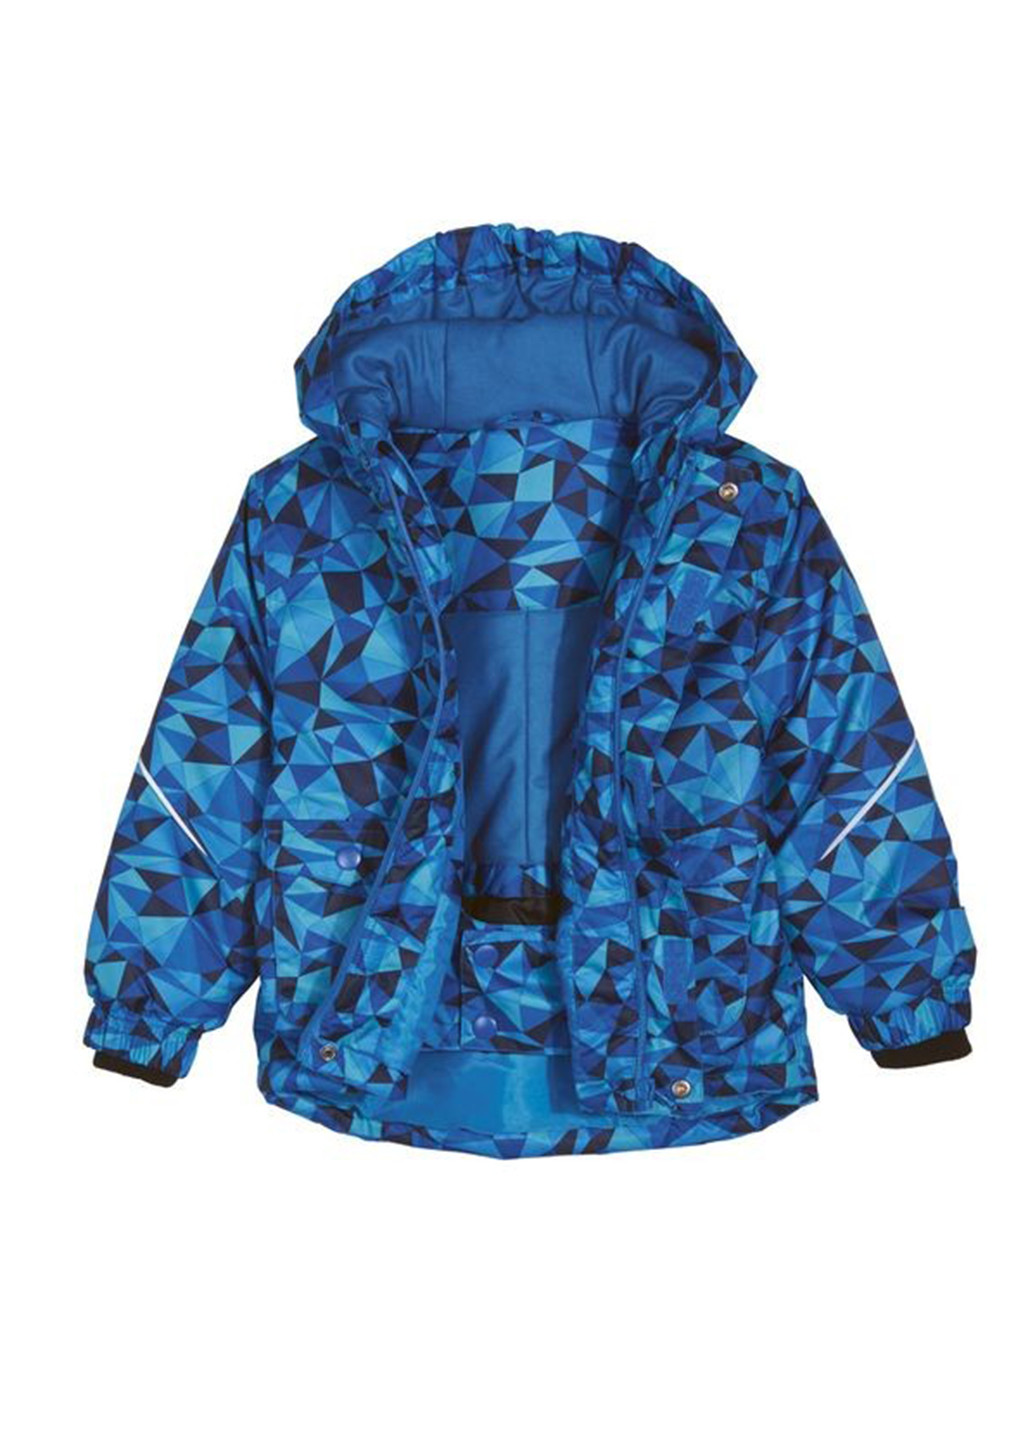 Синяя зимняя курточка Lupilu